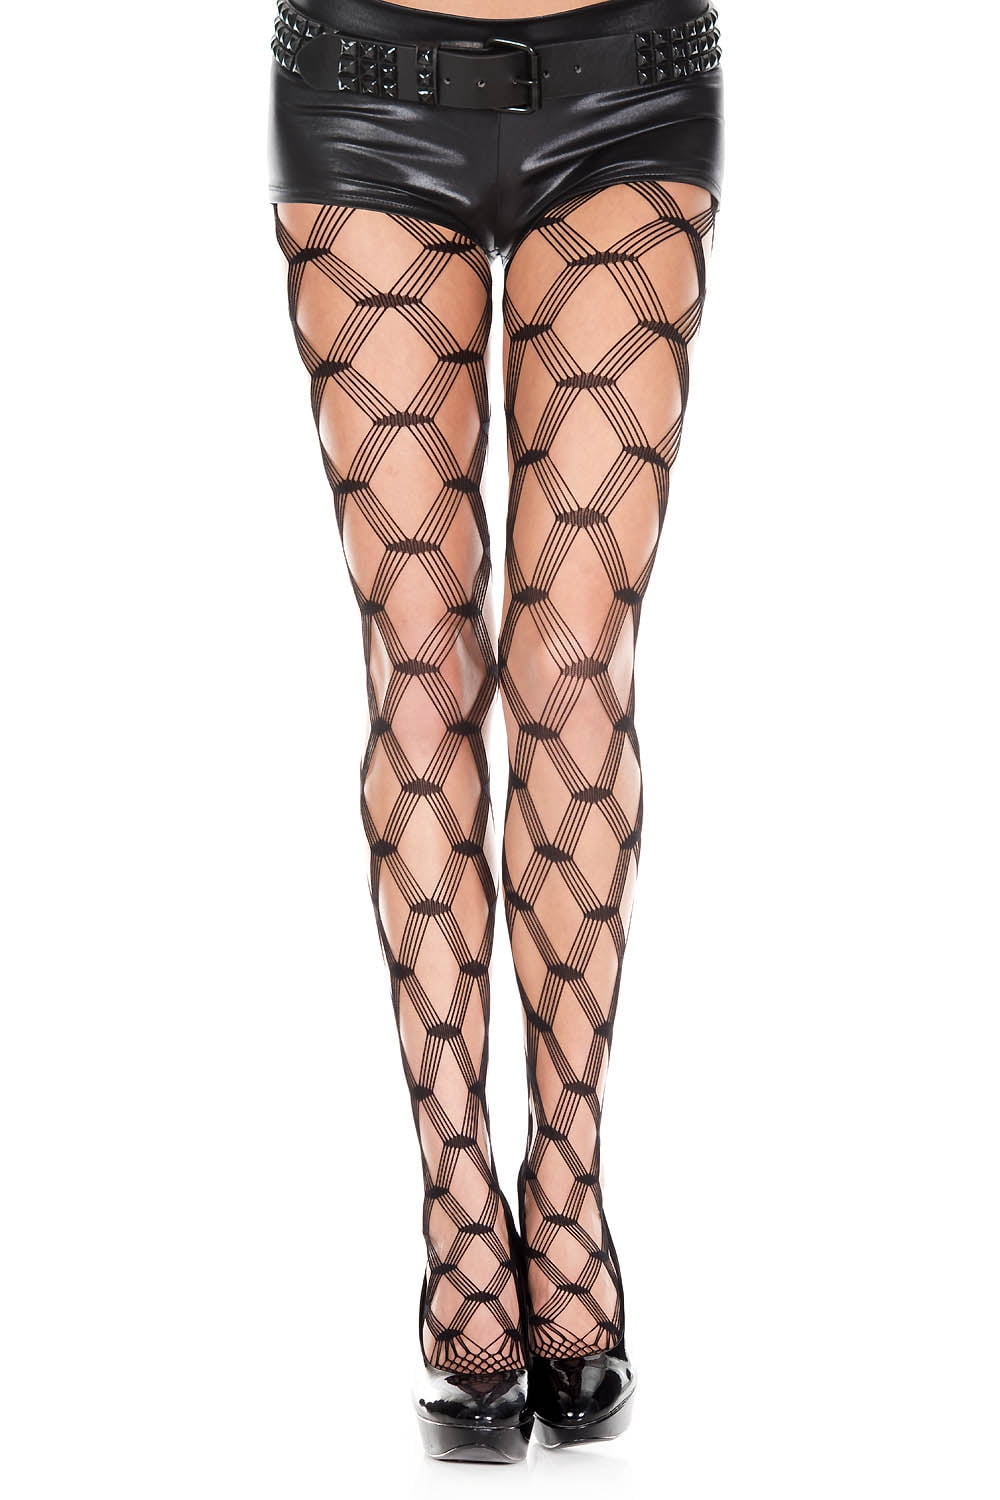 Women's Faux Knee High Black Stockings Diamond Net Fishnet Tights Full Pantyhose